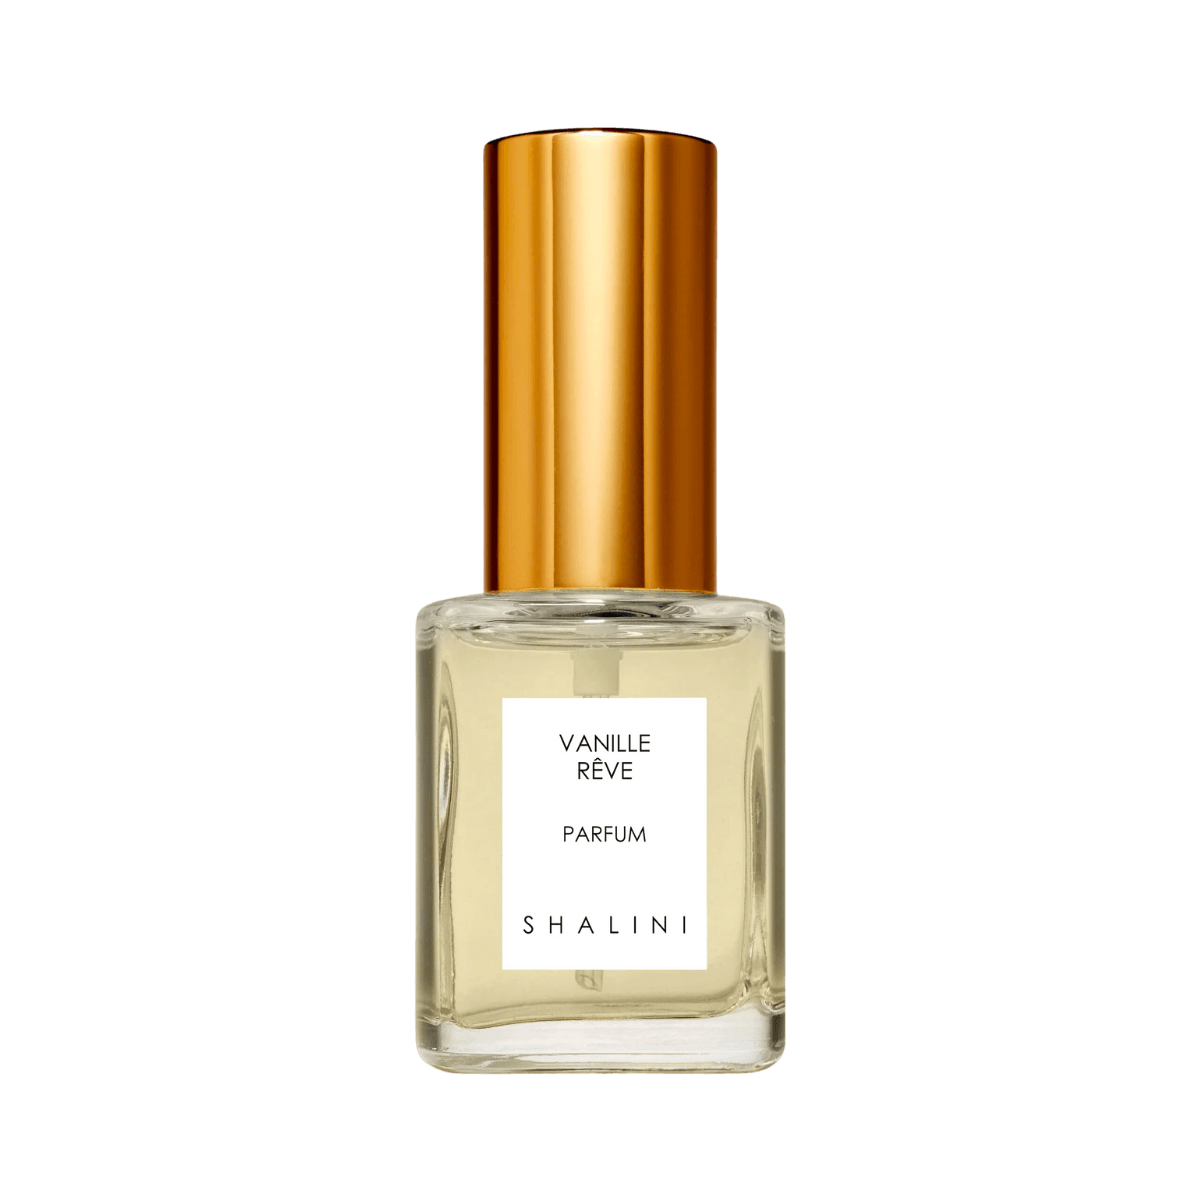 Image of Vanille Reve extrait de parfum by the perfume brand Shalini